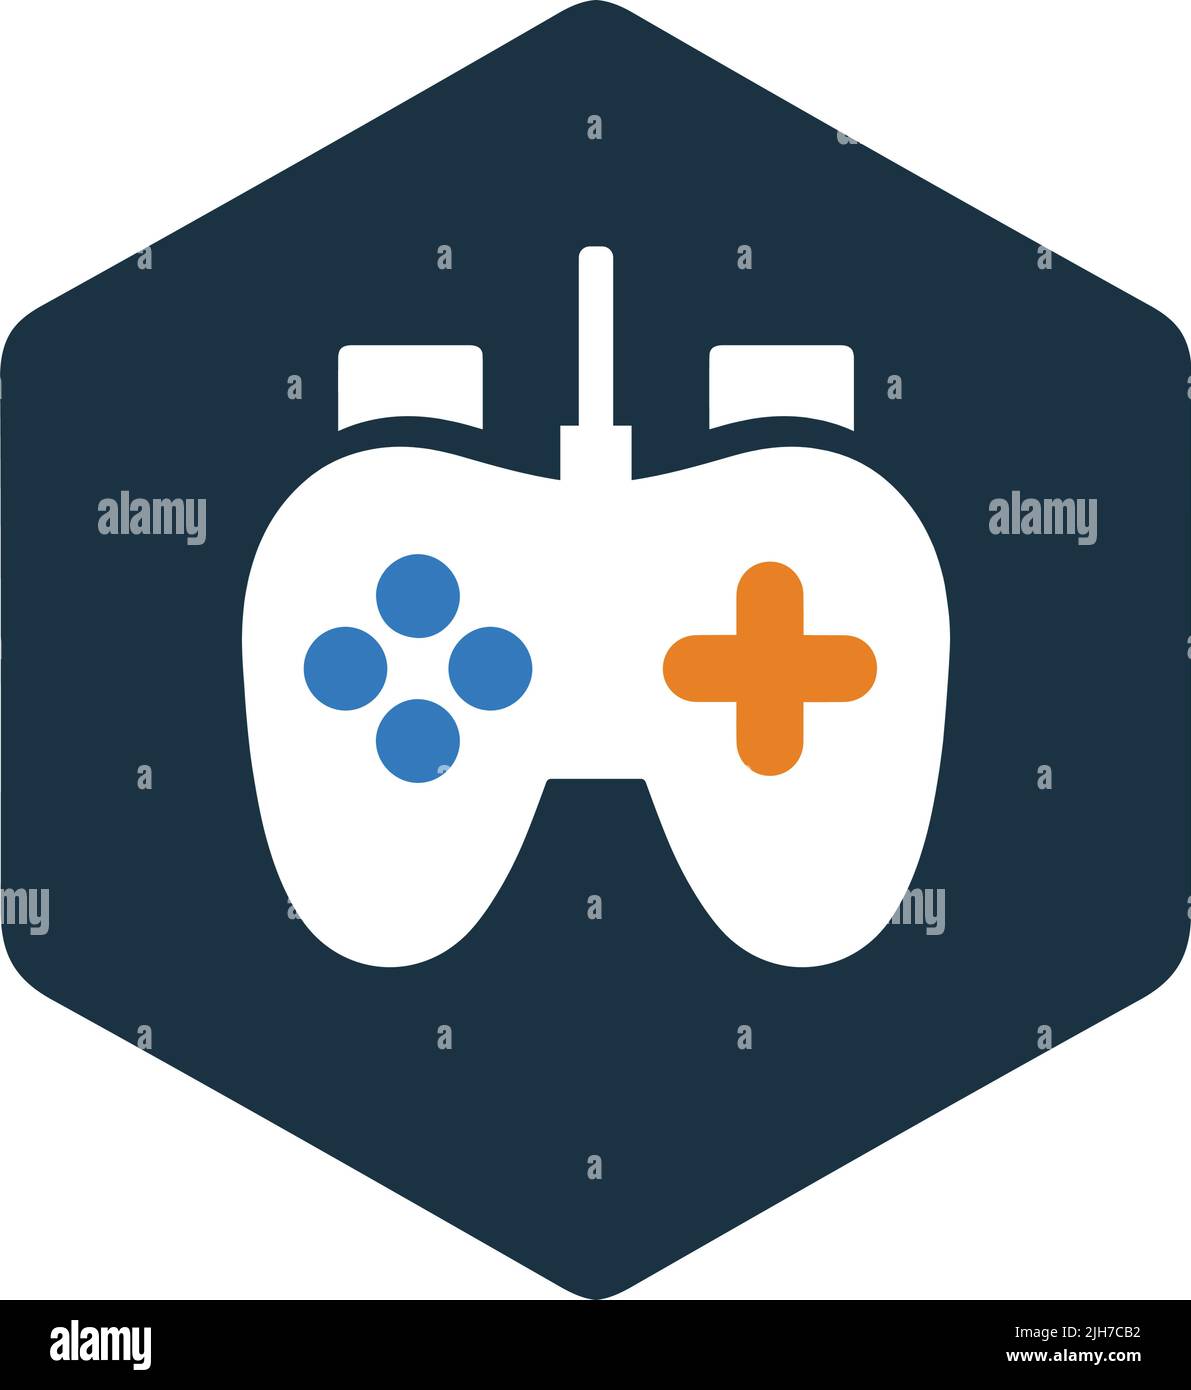 Blue Gamepad Logo - Turbologo Logo Maker